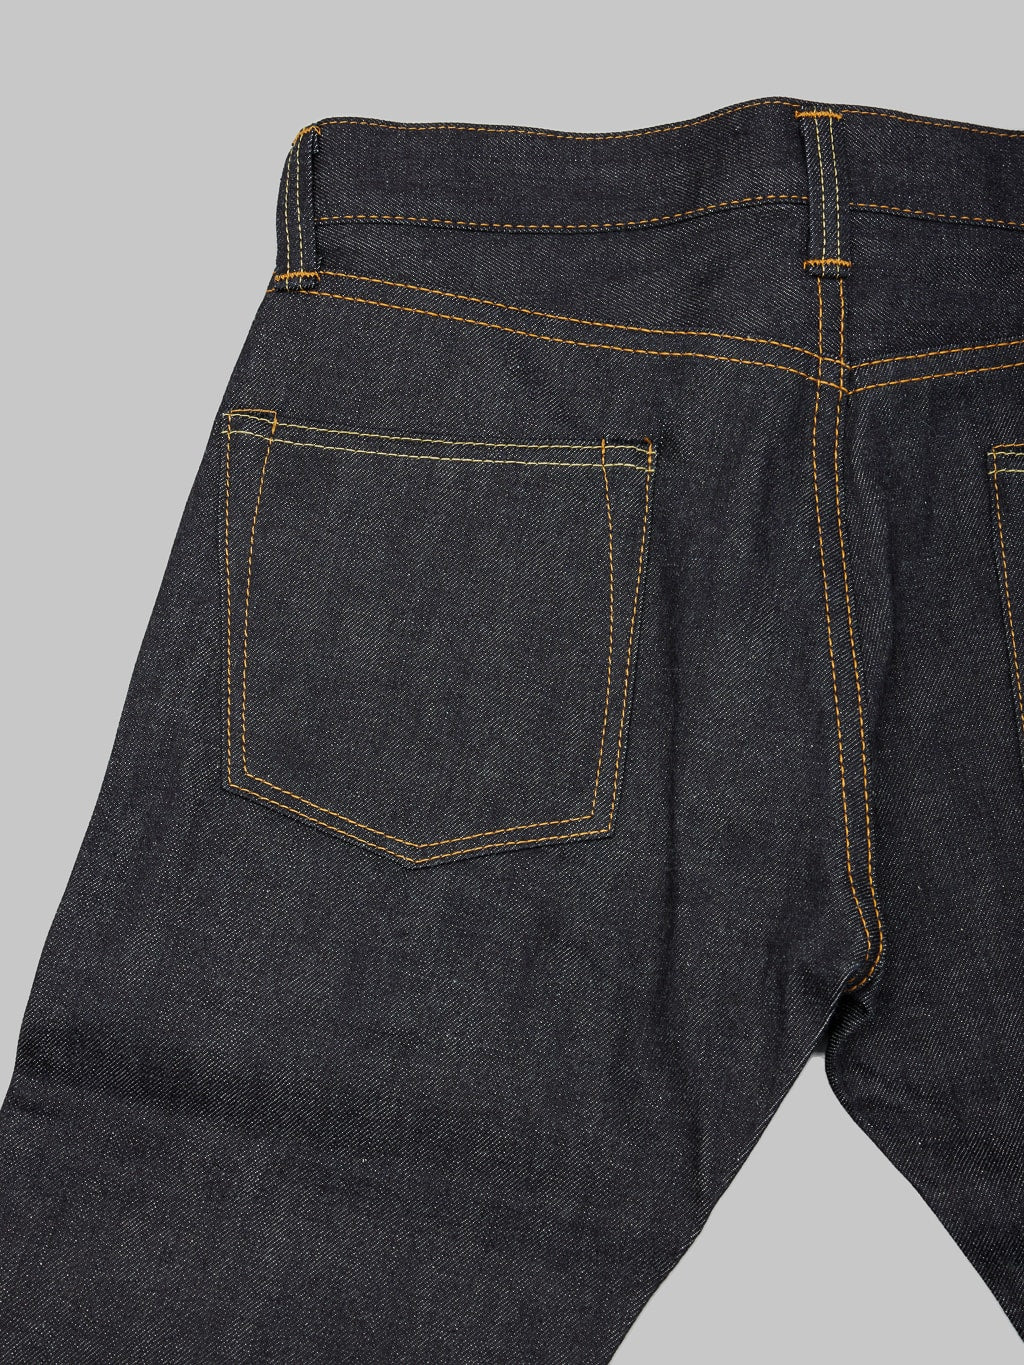 momotaro jeans 0306 12 12oz selvedge denim tight tapered plain pocket